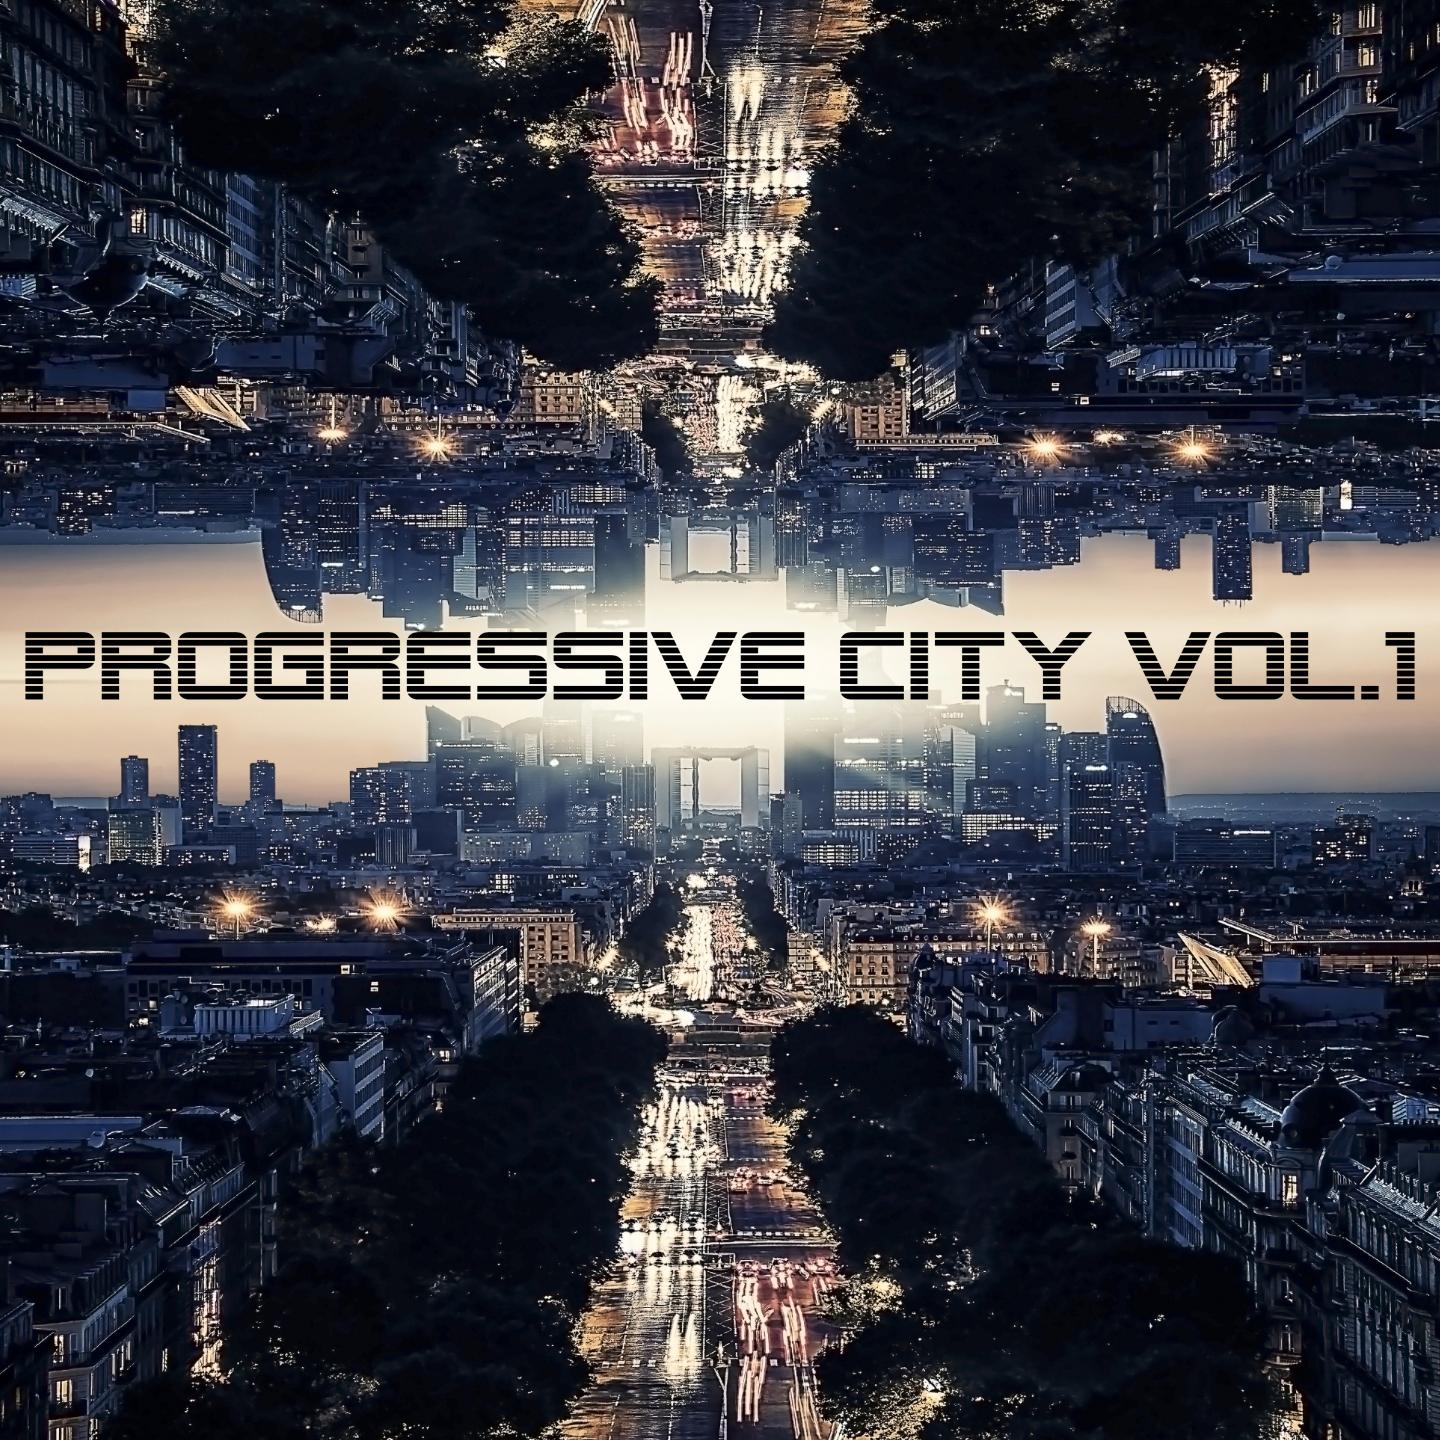 Progressive City 2K19